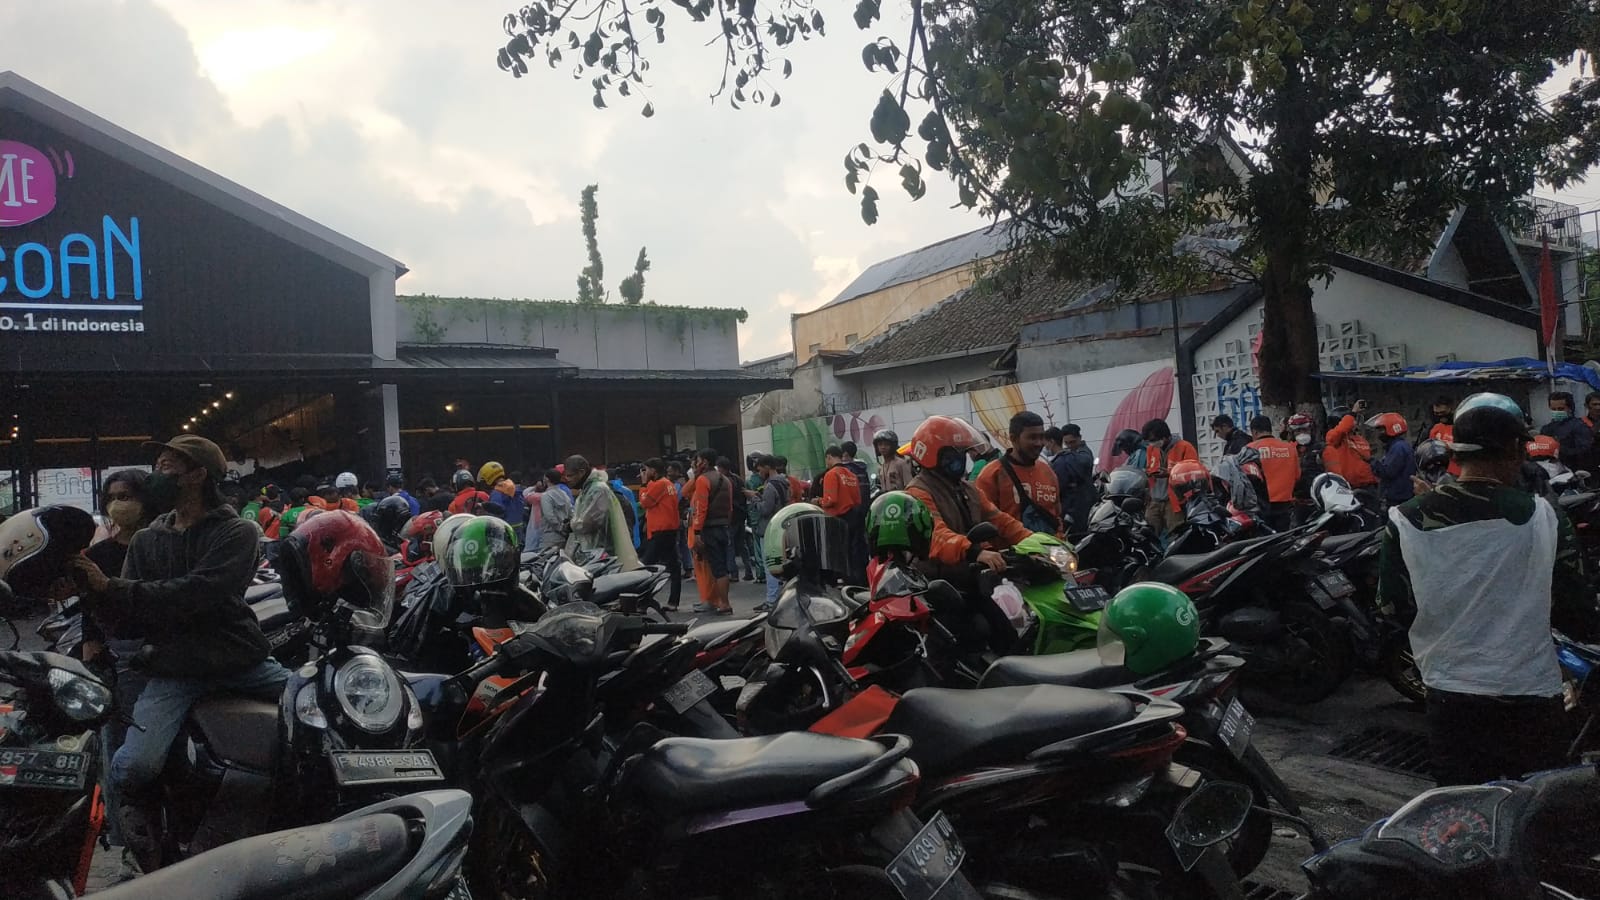 RAMAI: Parkiran sempat membludak di suatu restoran hingga memakan bahu jalan sekitar Jl. Pasir Kaliki, Kota Bandung, Selasa (10/4).